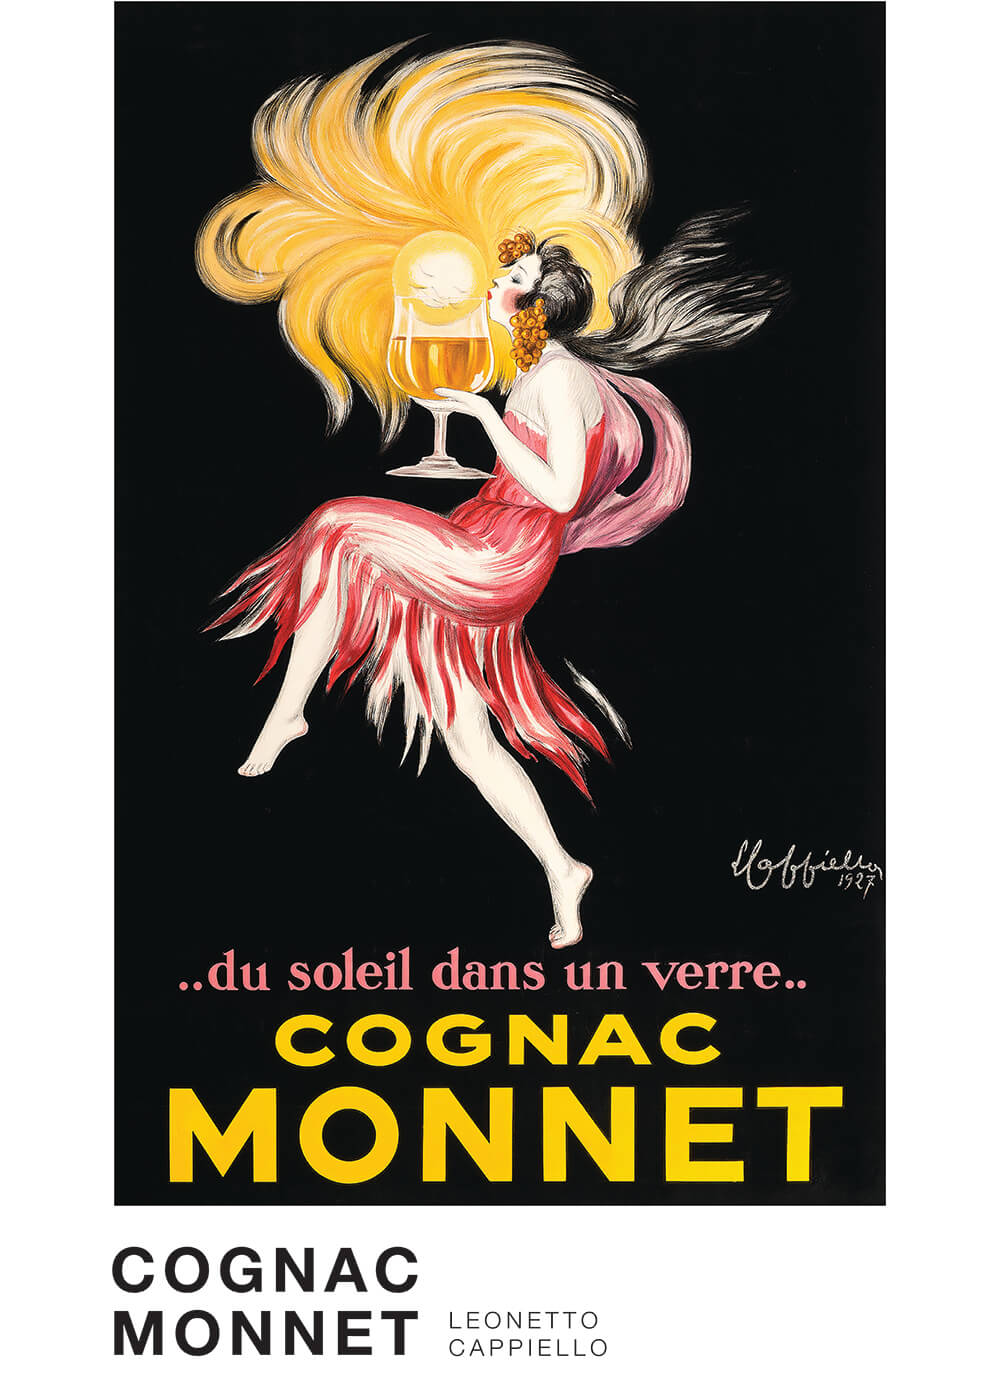 Billede af Cognac monnet - Leonetto Cappiello kunstplakat